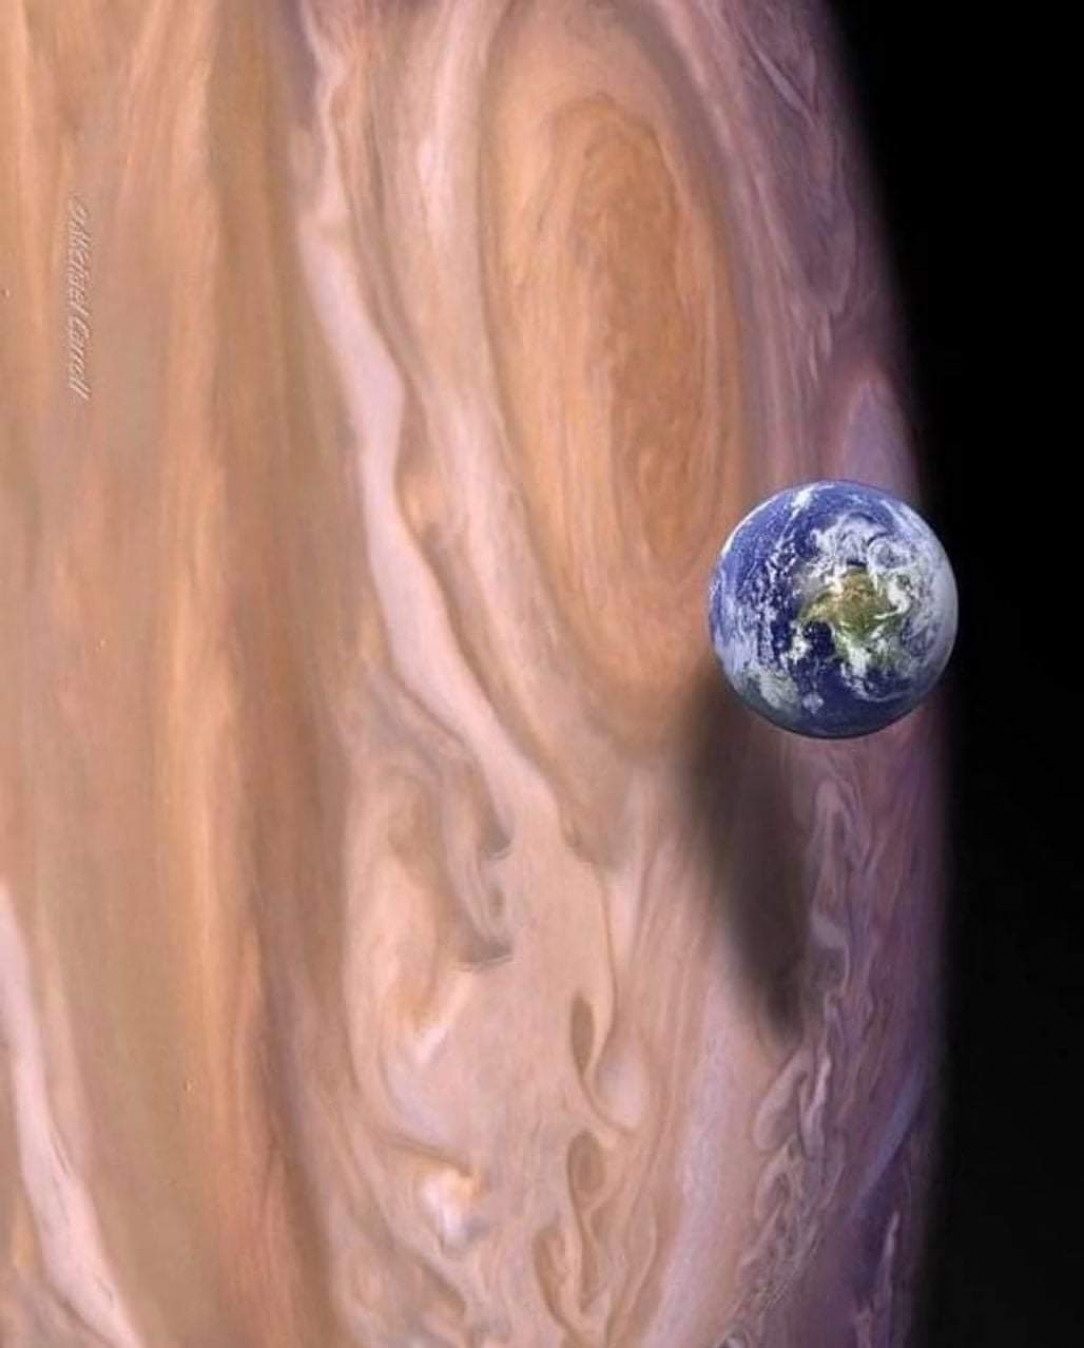 Size of Earth vs size of Jupiter